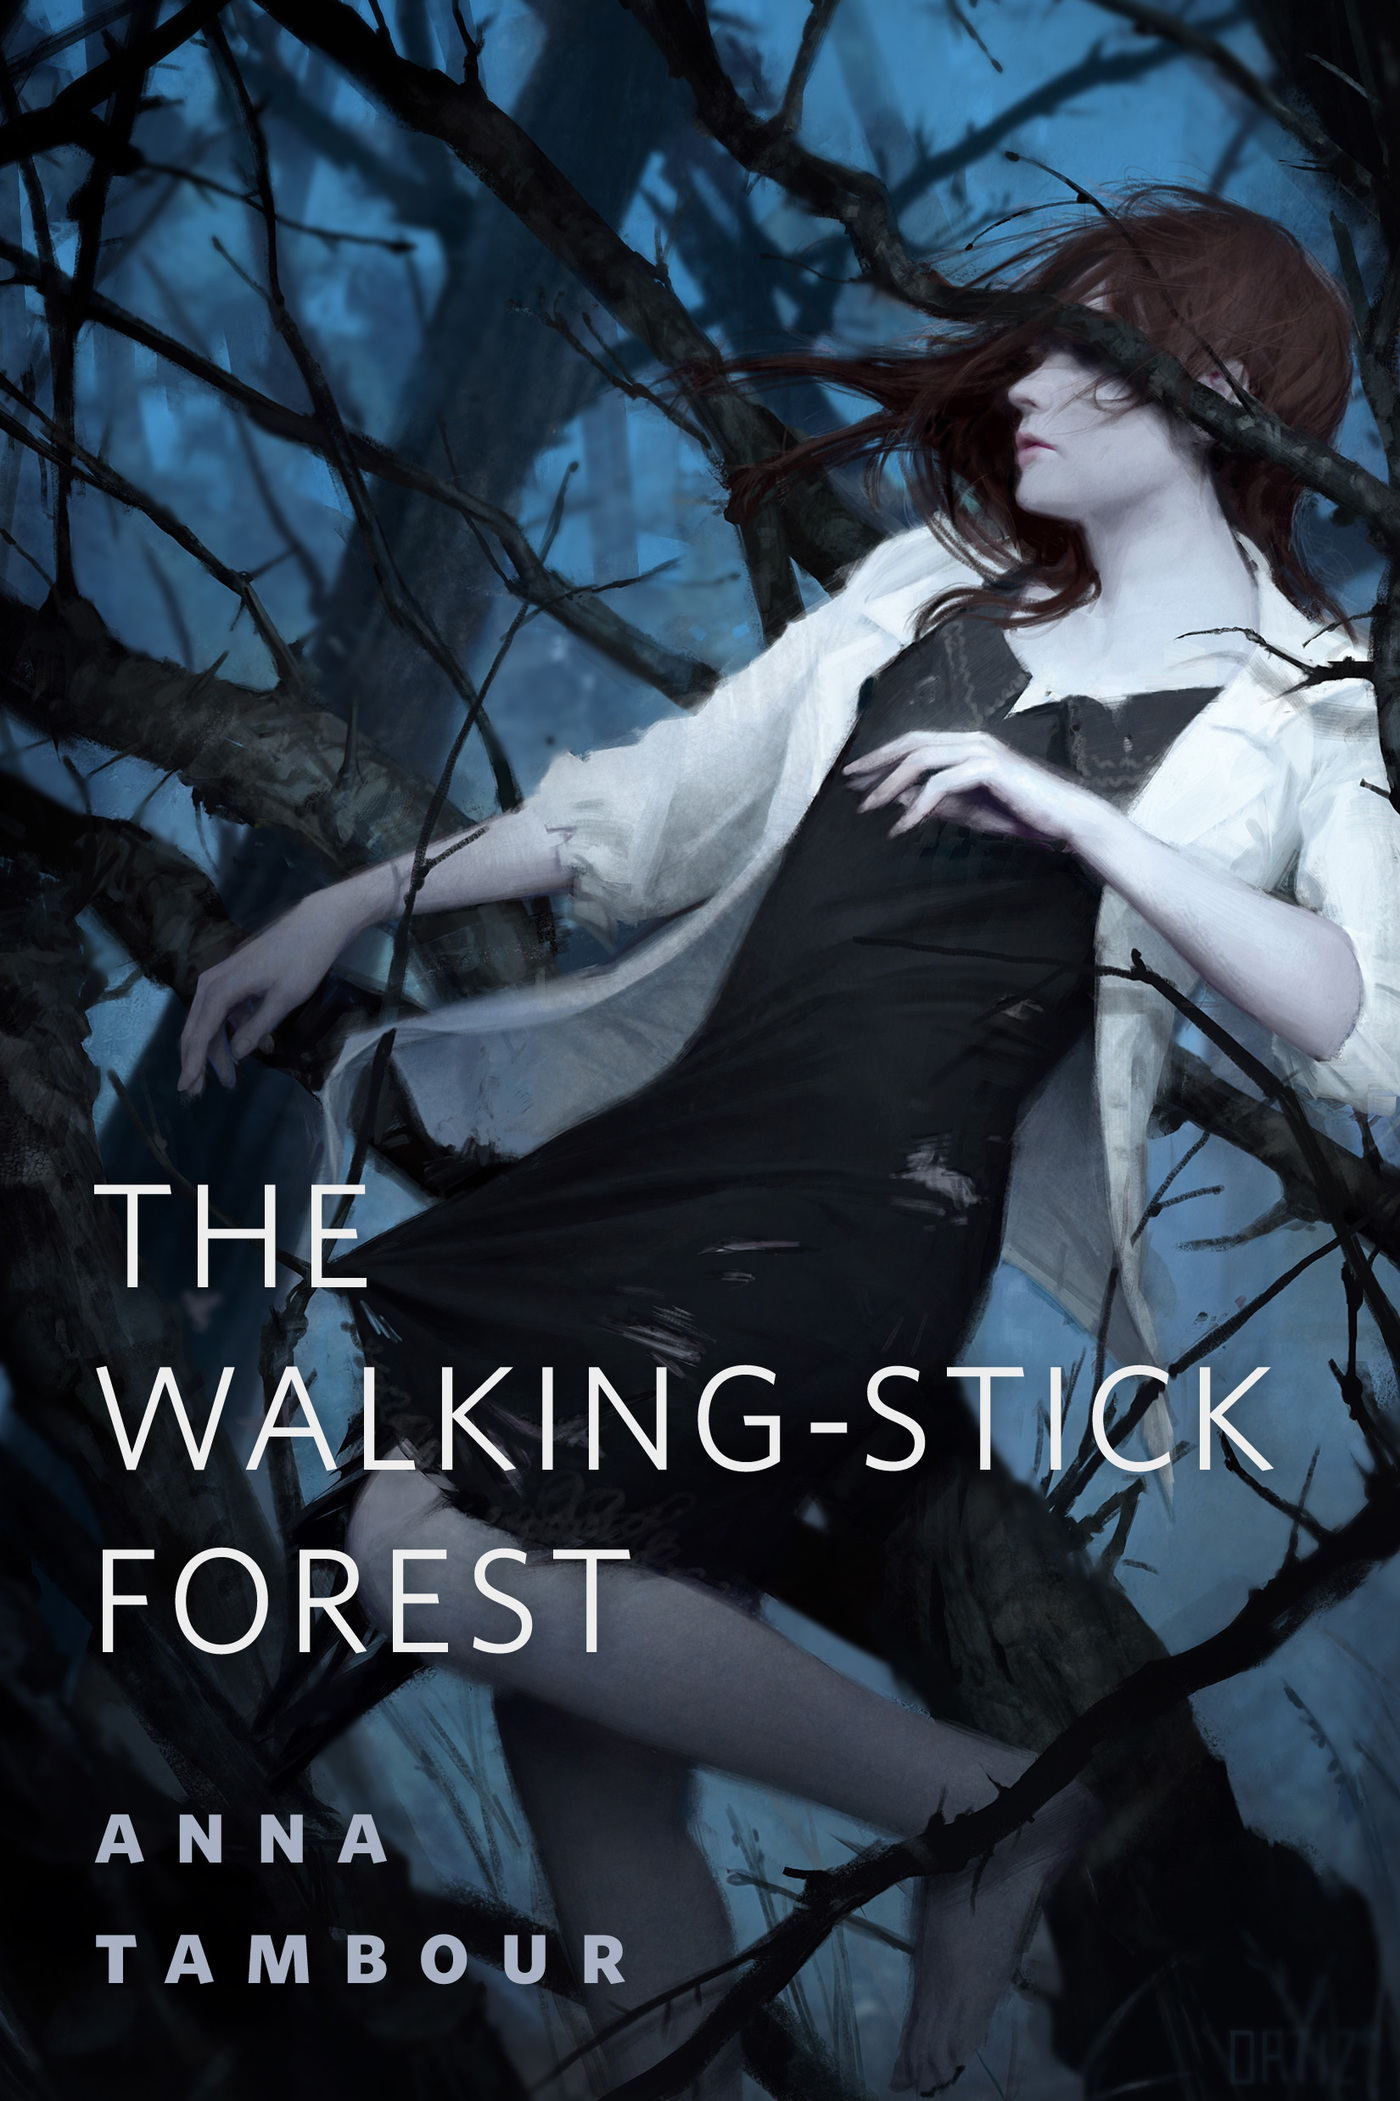 The Walking-stick Forest : A Tor.Com Original by Anna Tambour